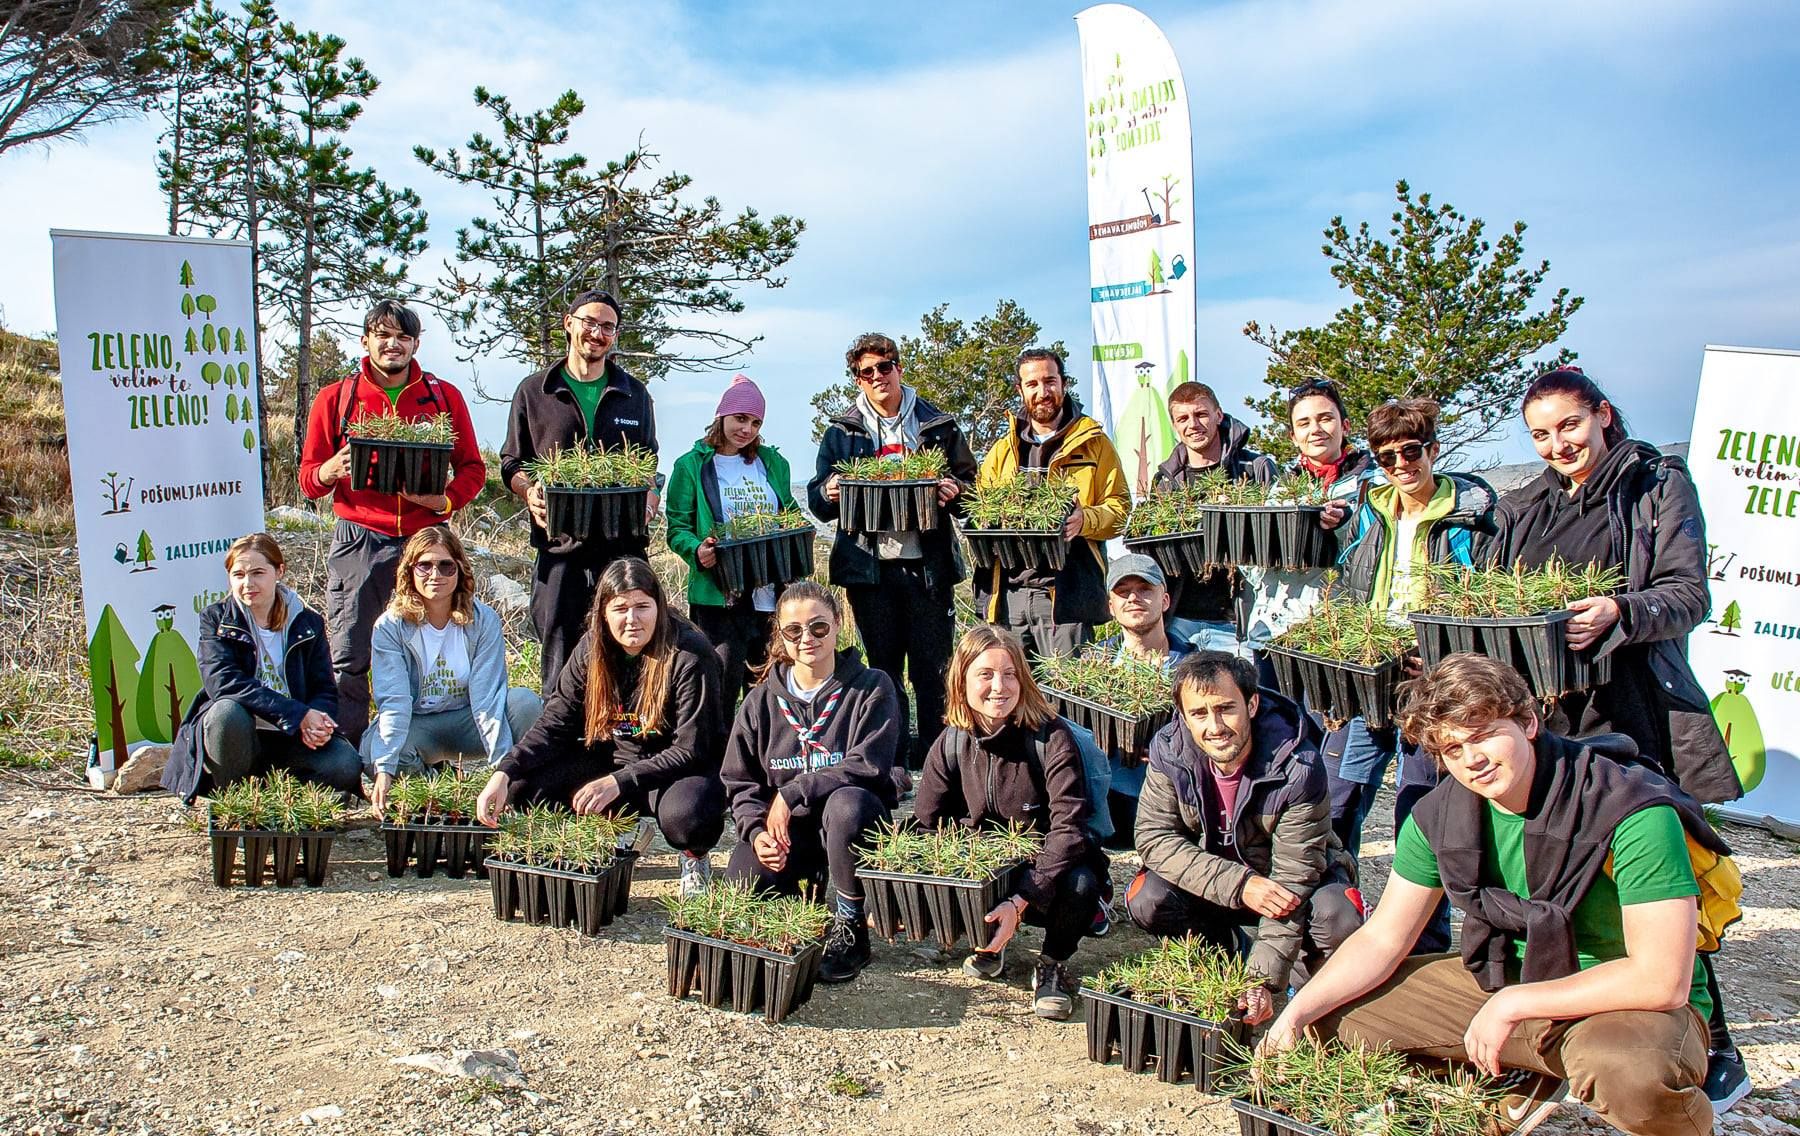  Scout association of Split plants 2,200 new trees